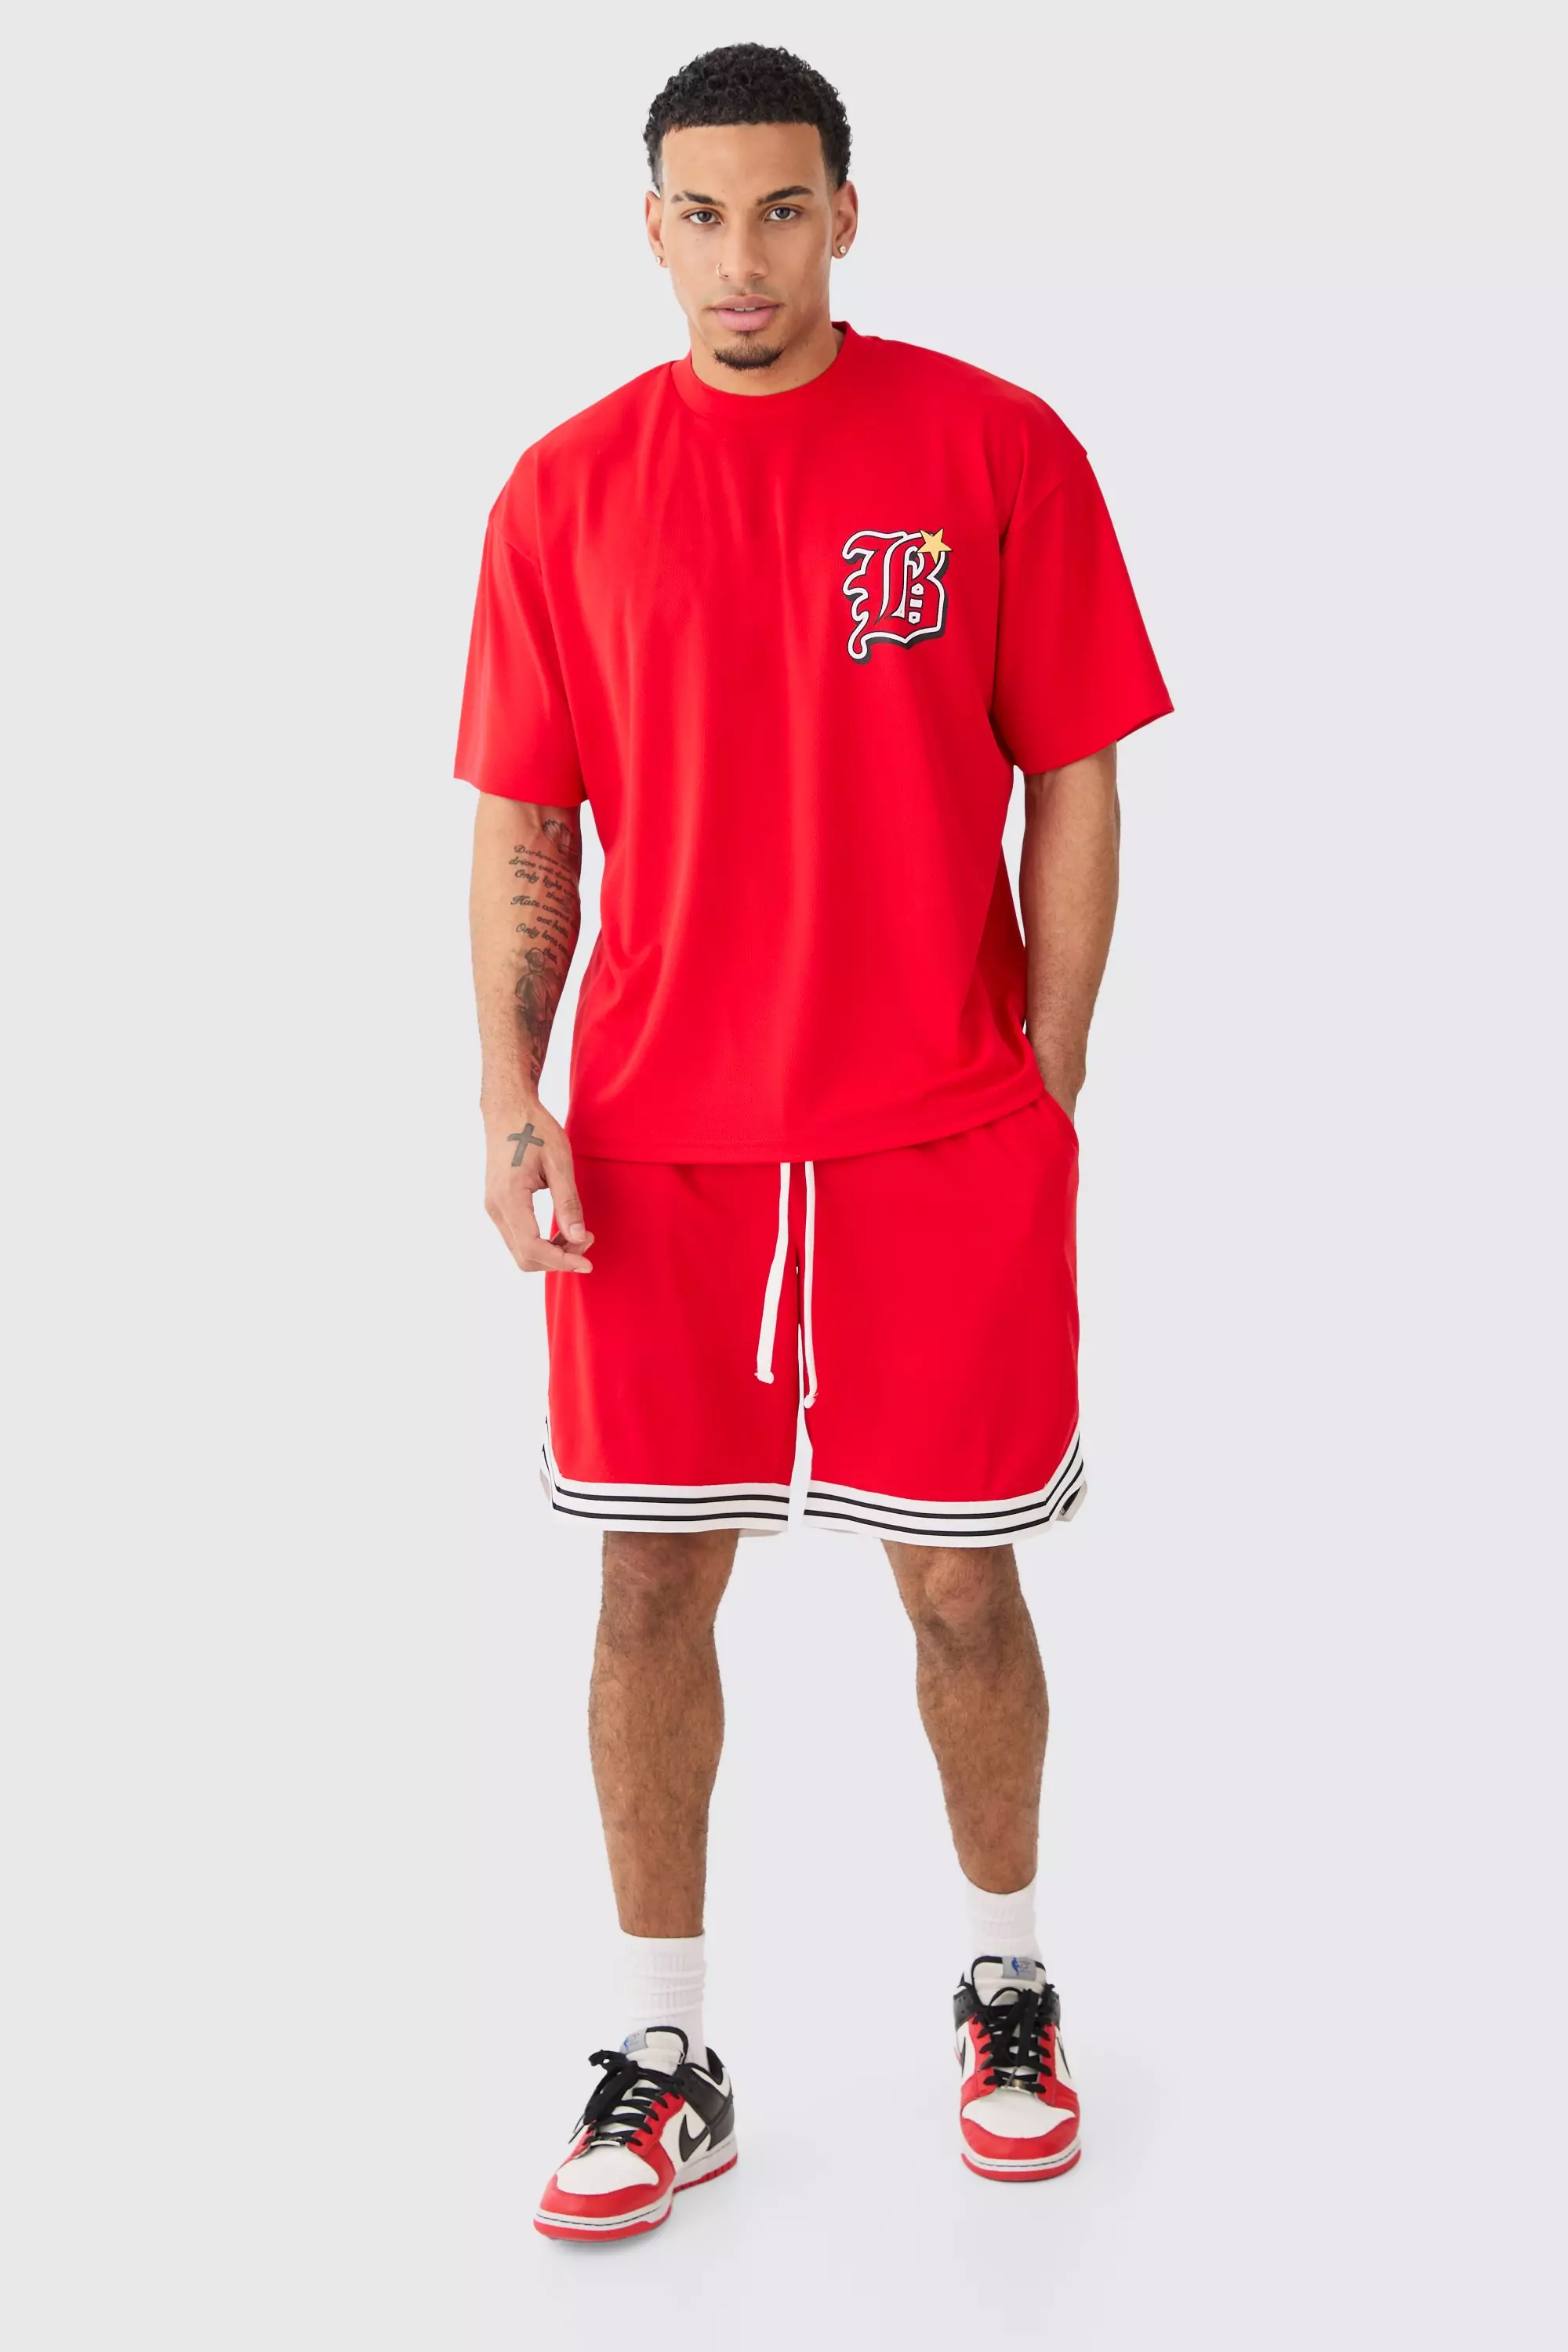 Red Oversized Mesh Varsity Top And Basketball Shorts Set